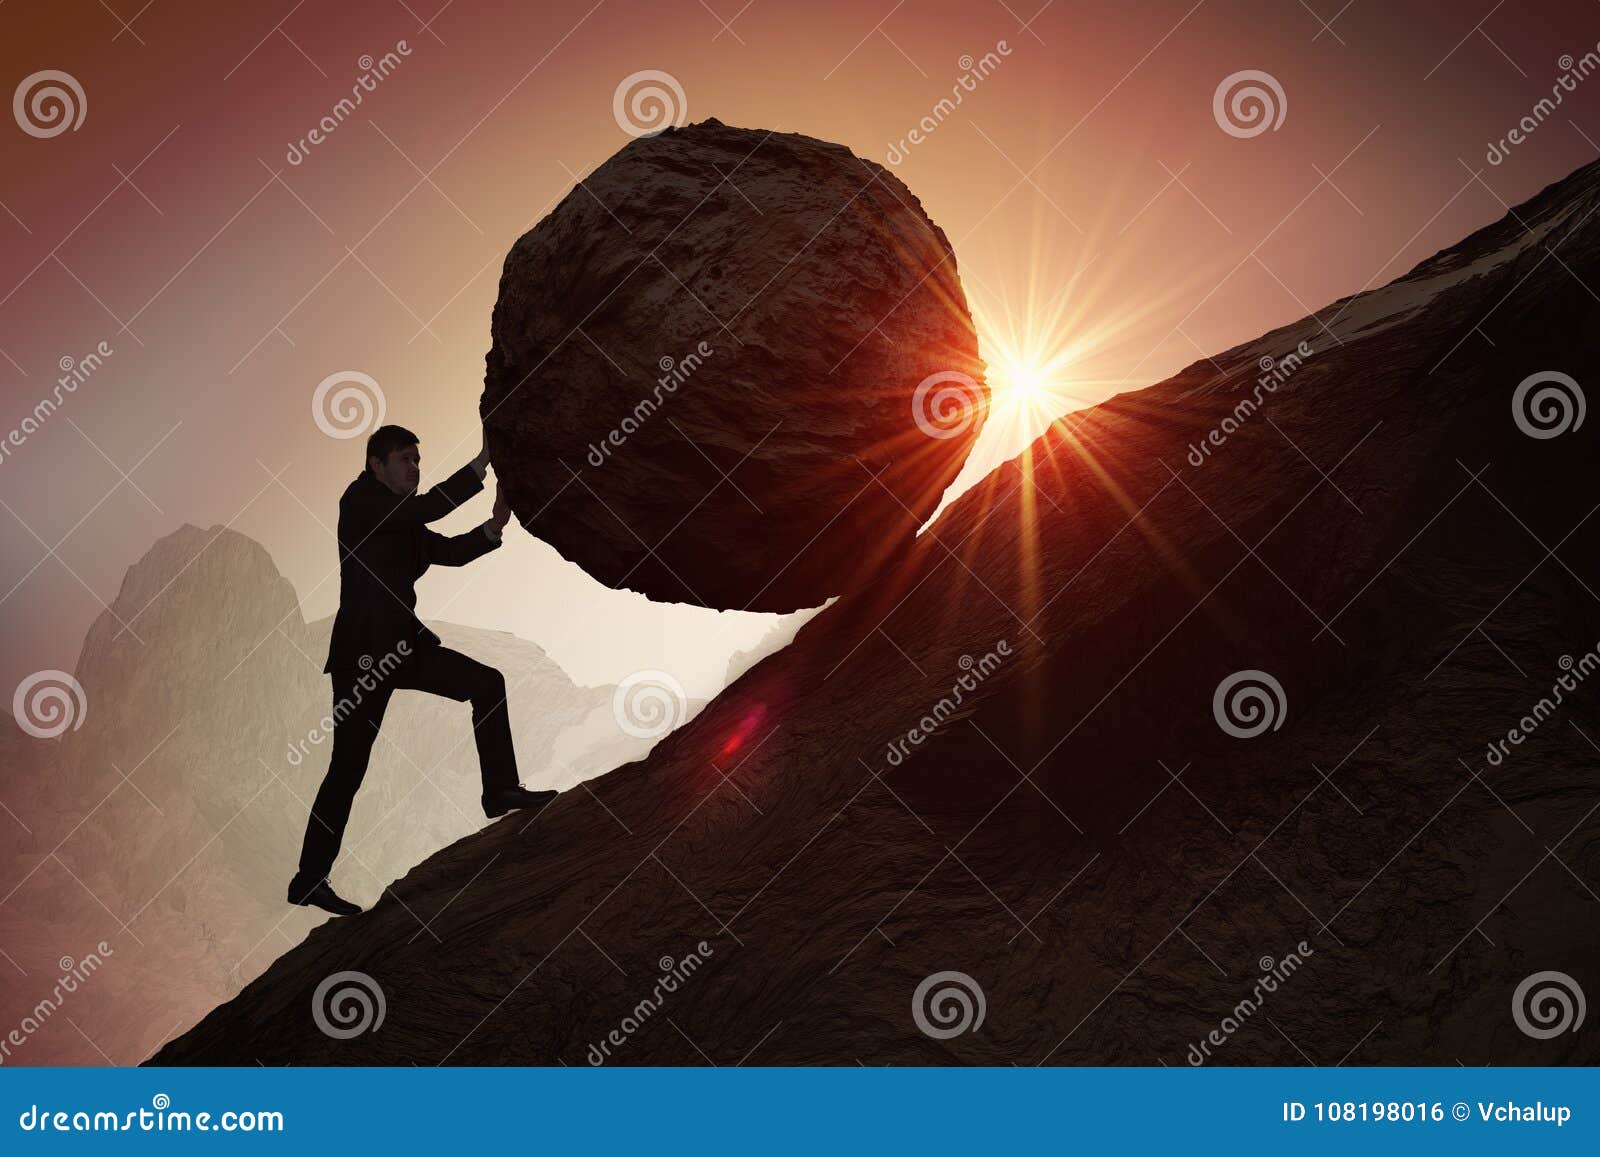 sisyphus metaphore. silhouette of businessman pushing heavy stone boulder up on hill